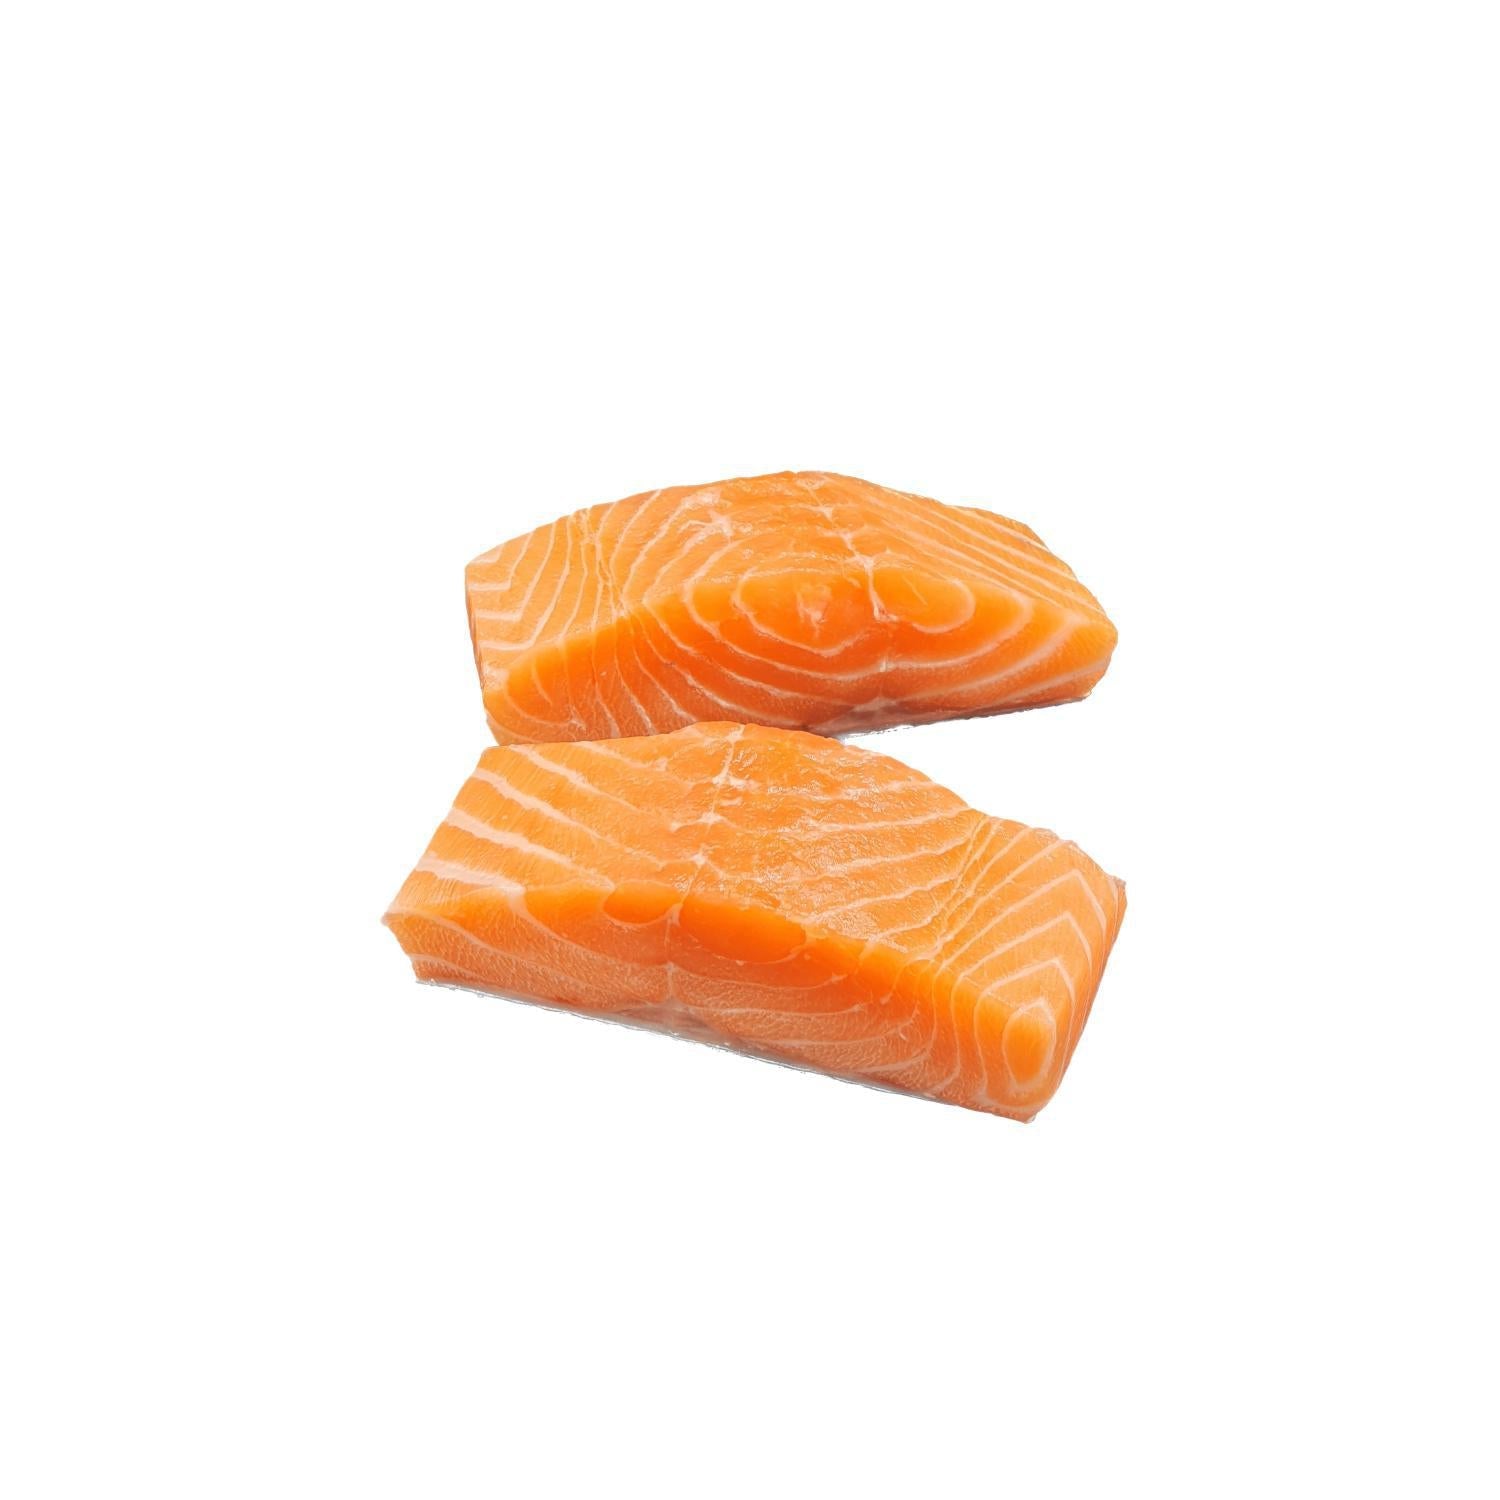 Stickleback Fish - Salmon Supreme